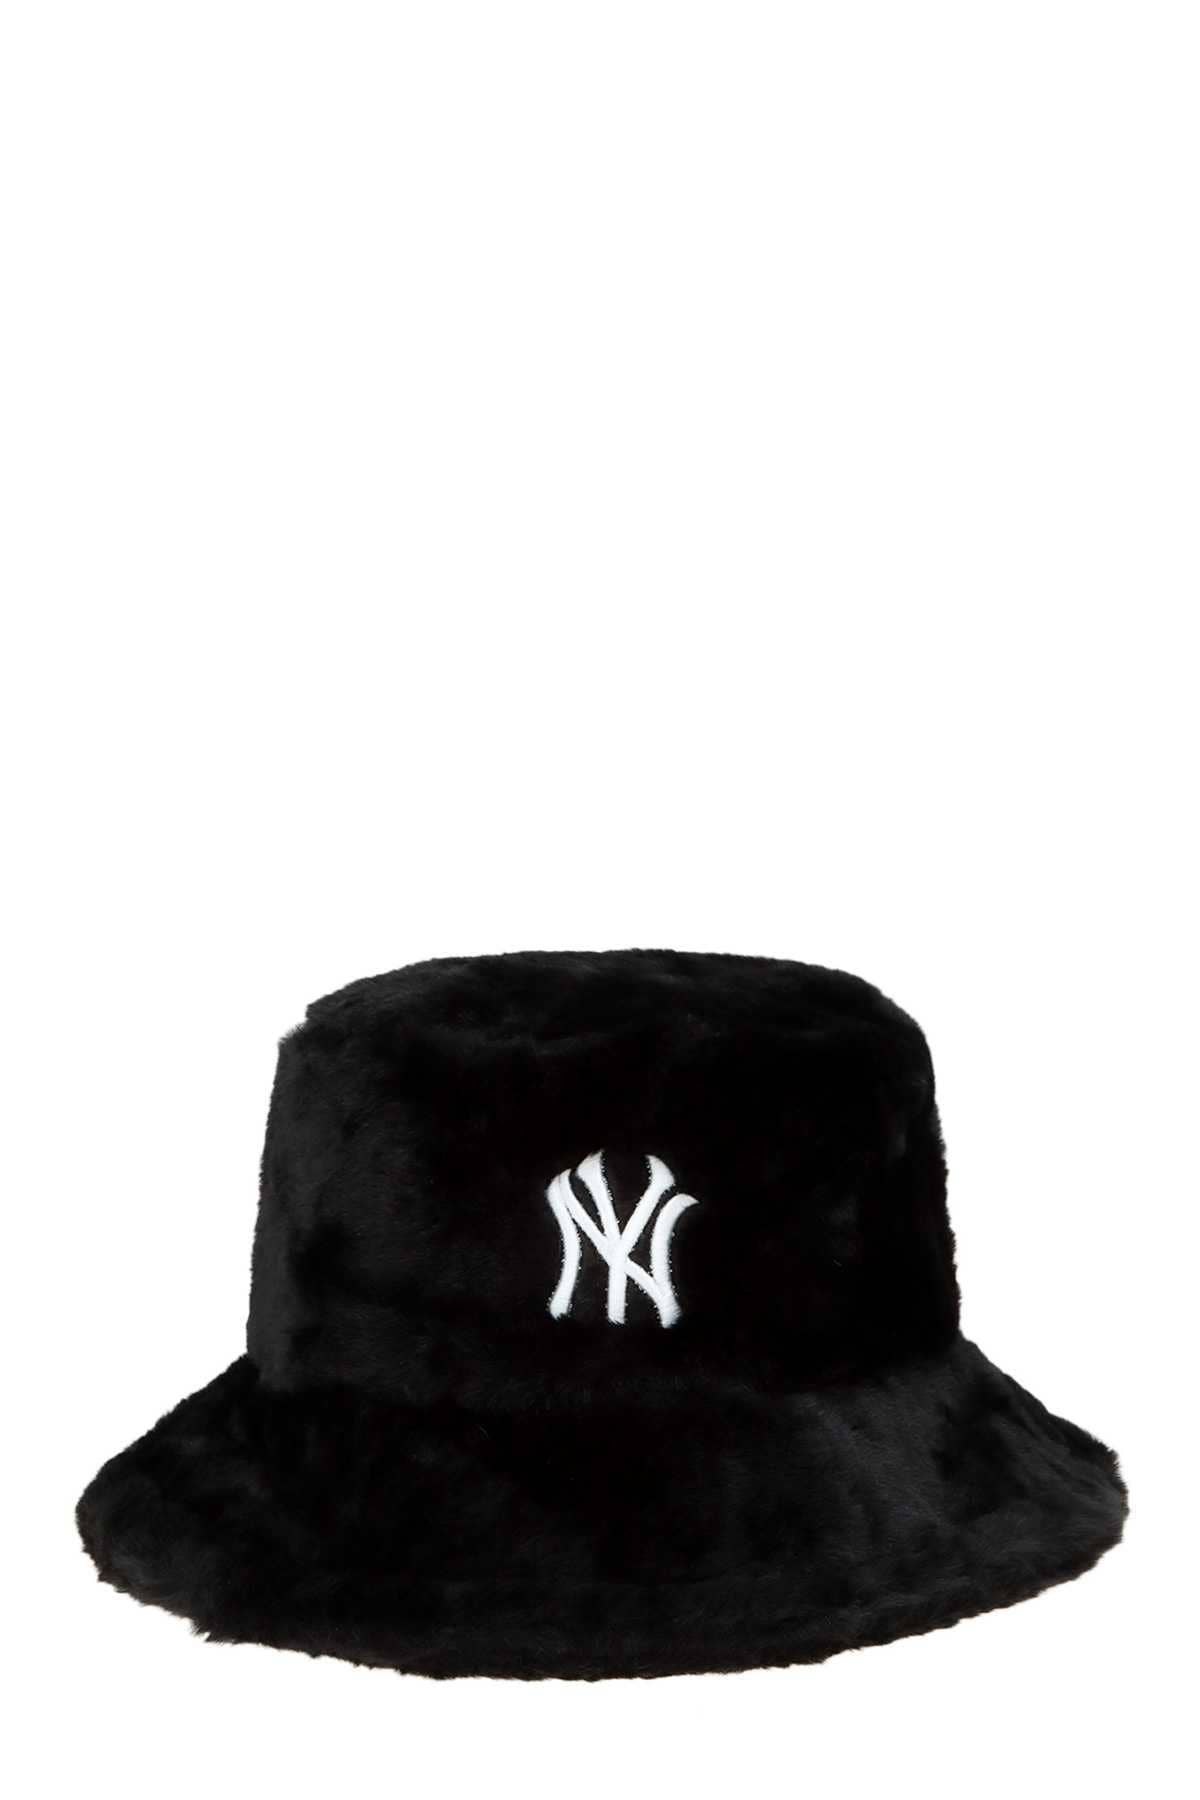 NY Embroidery Fur Bucket Hat